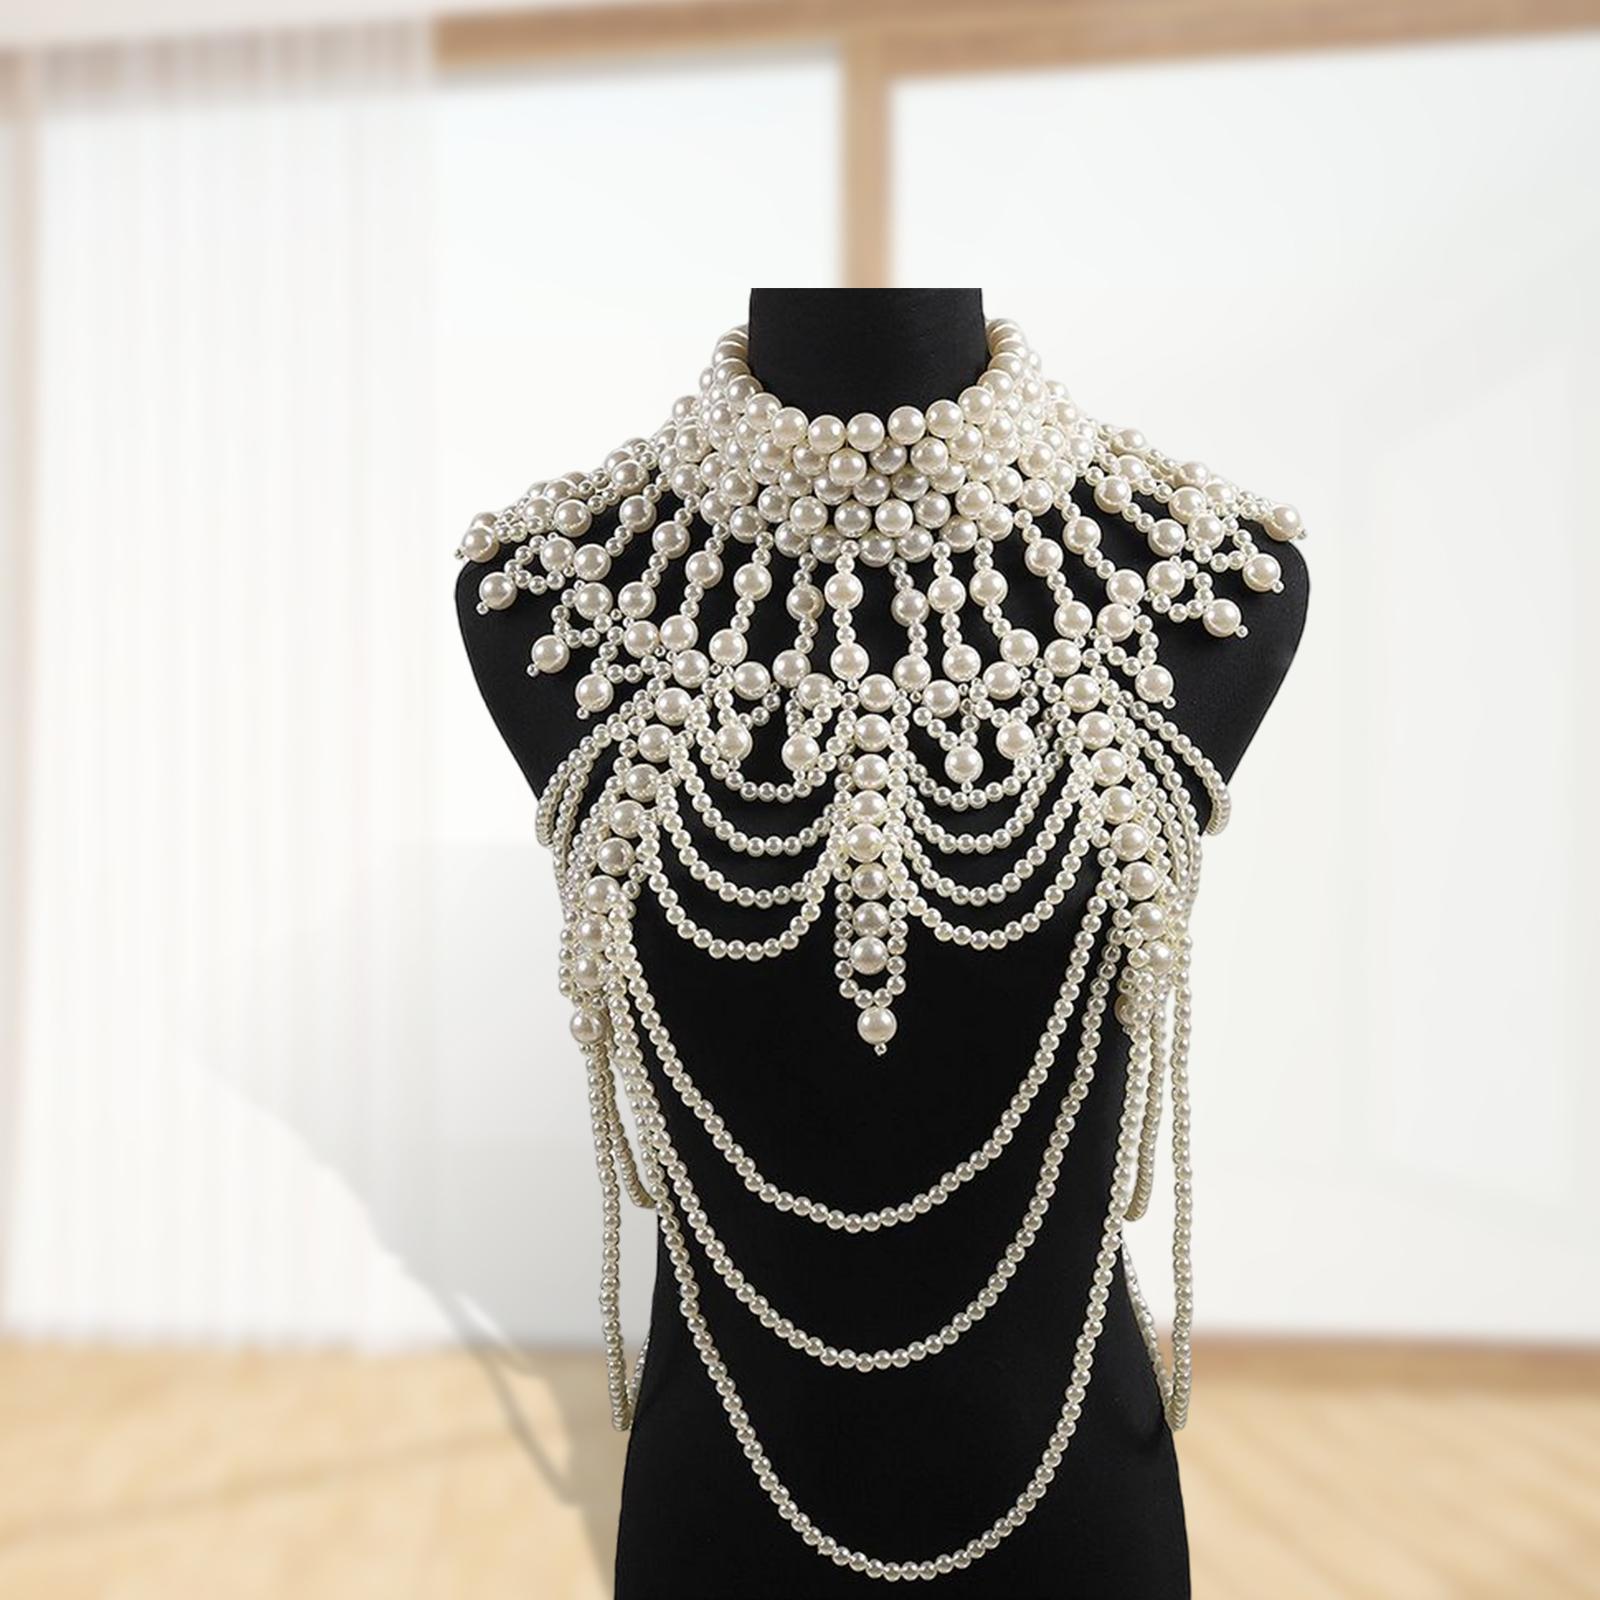 Pearl Body Chain Costume Multilayer Jewelry for Beach, Nightclub, Dance, Women, Girls